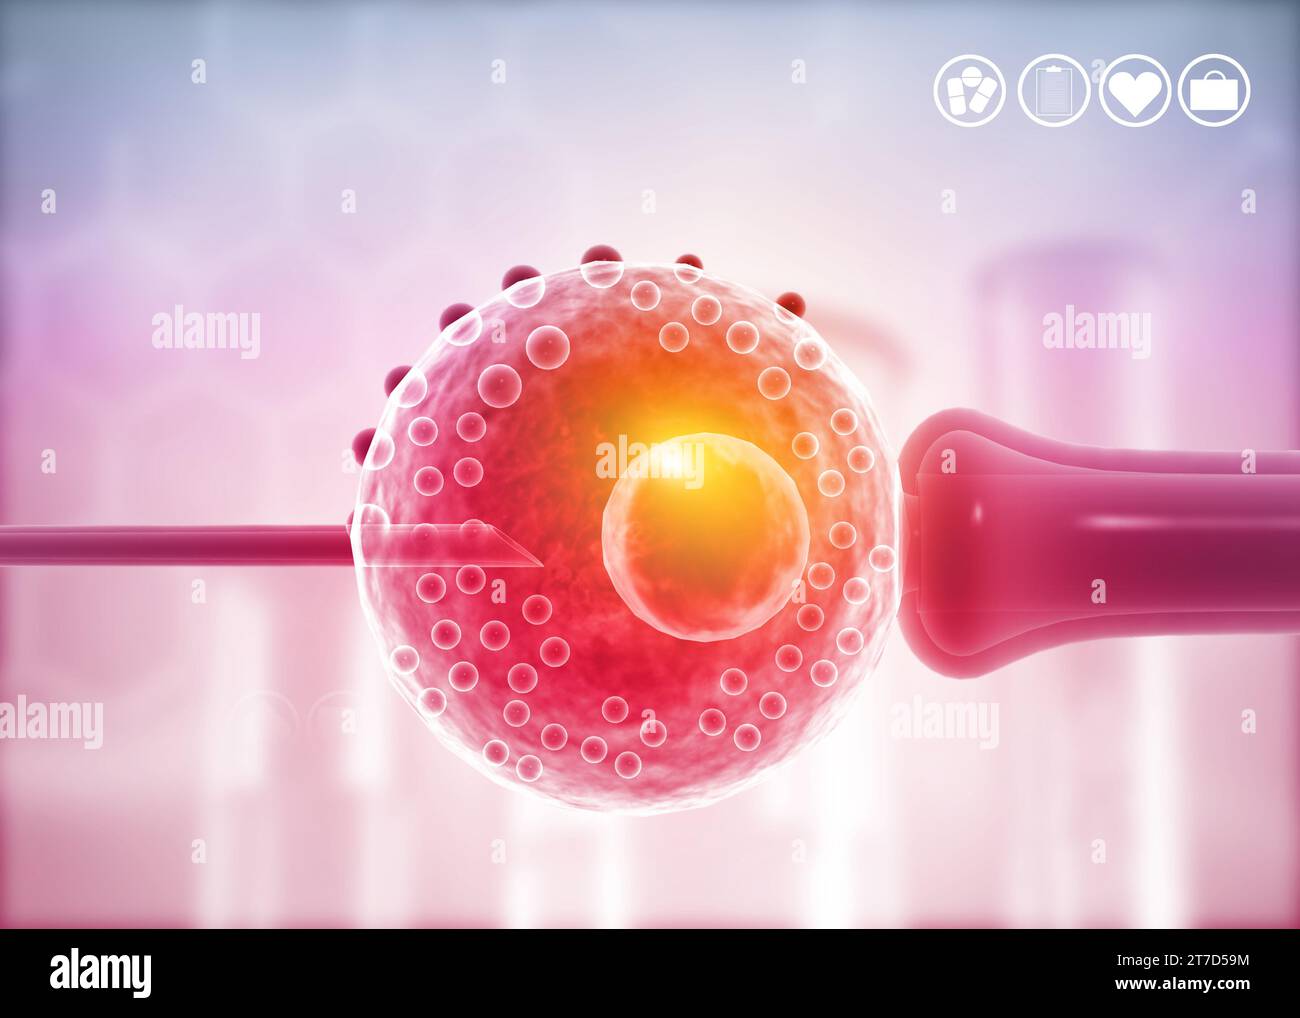 In vitro fertilization on medical background. 3d illustration Stock Photo